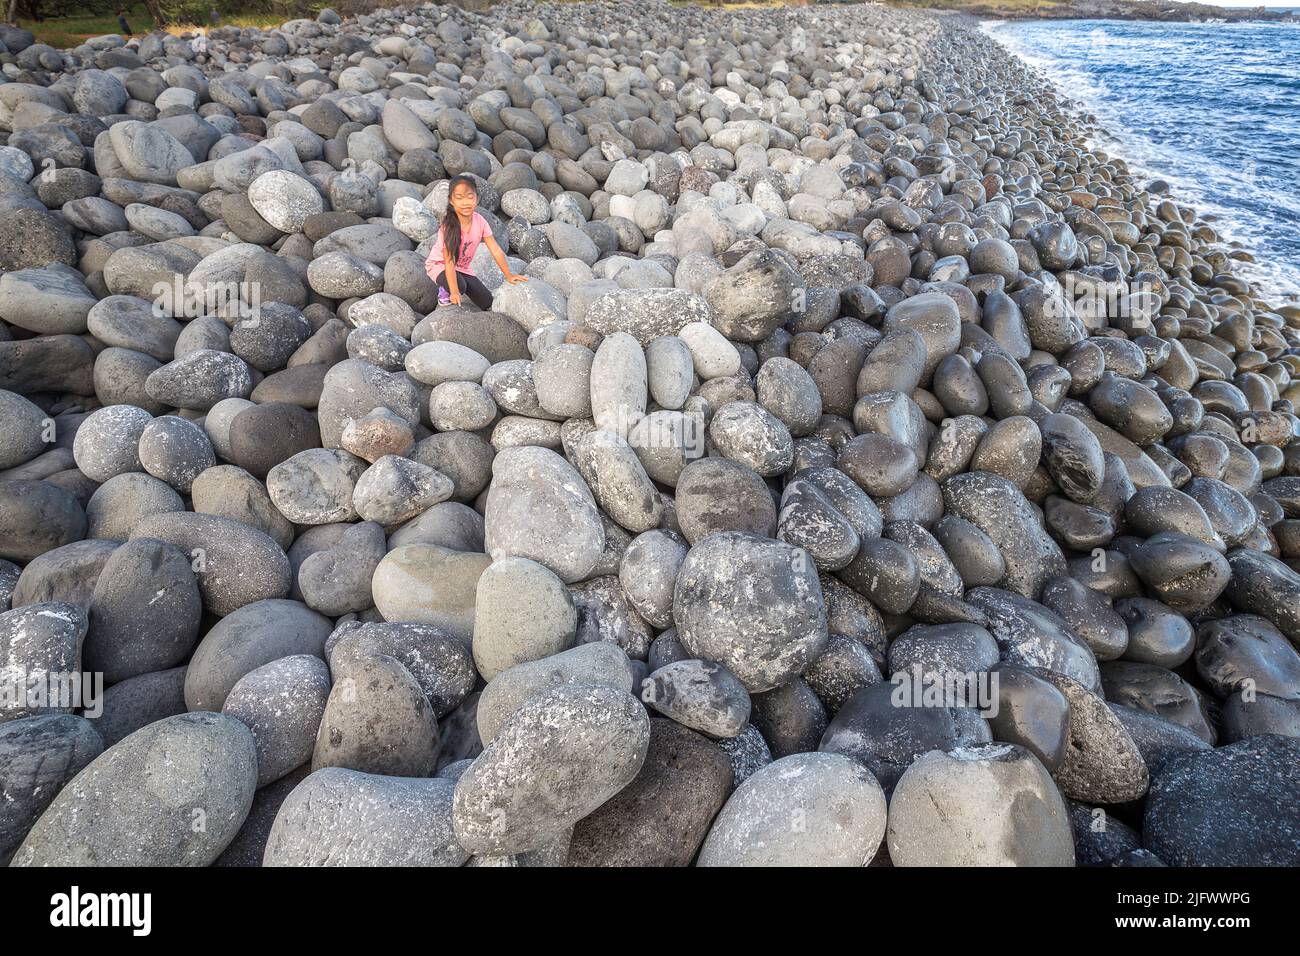 A young girl (MR) on a south facing beach near Nuu Bay with huge stone boulders, Maui, Hawaii. Stock Photo